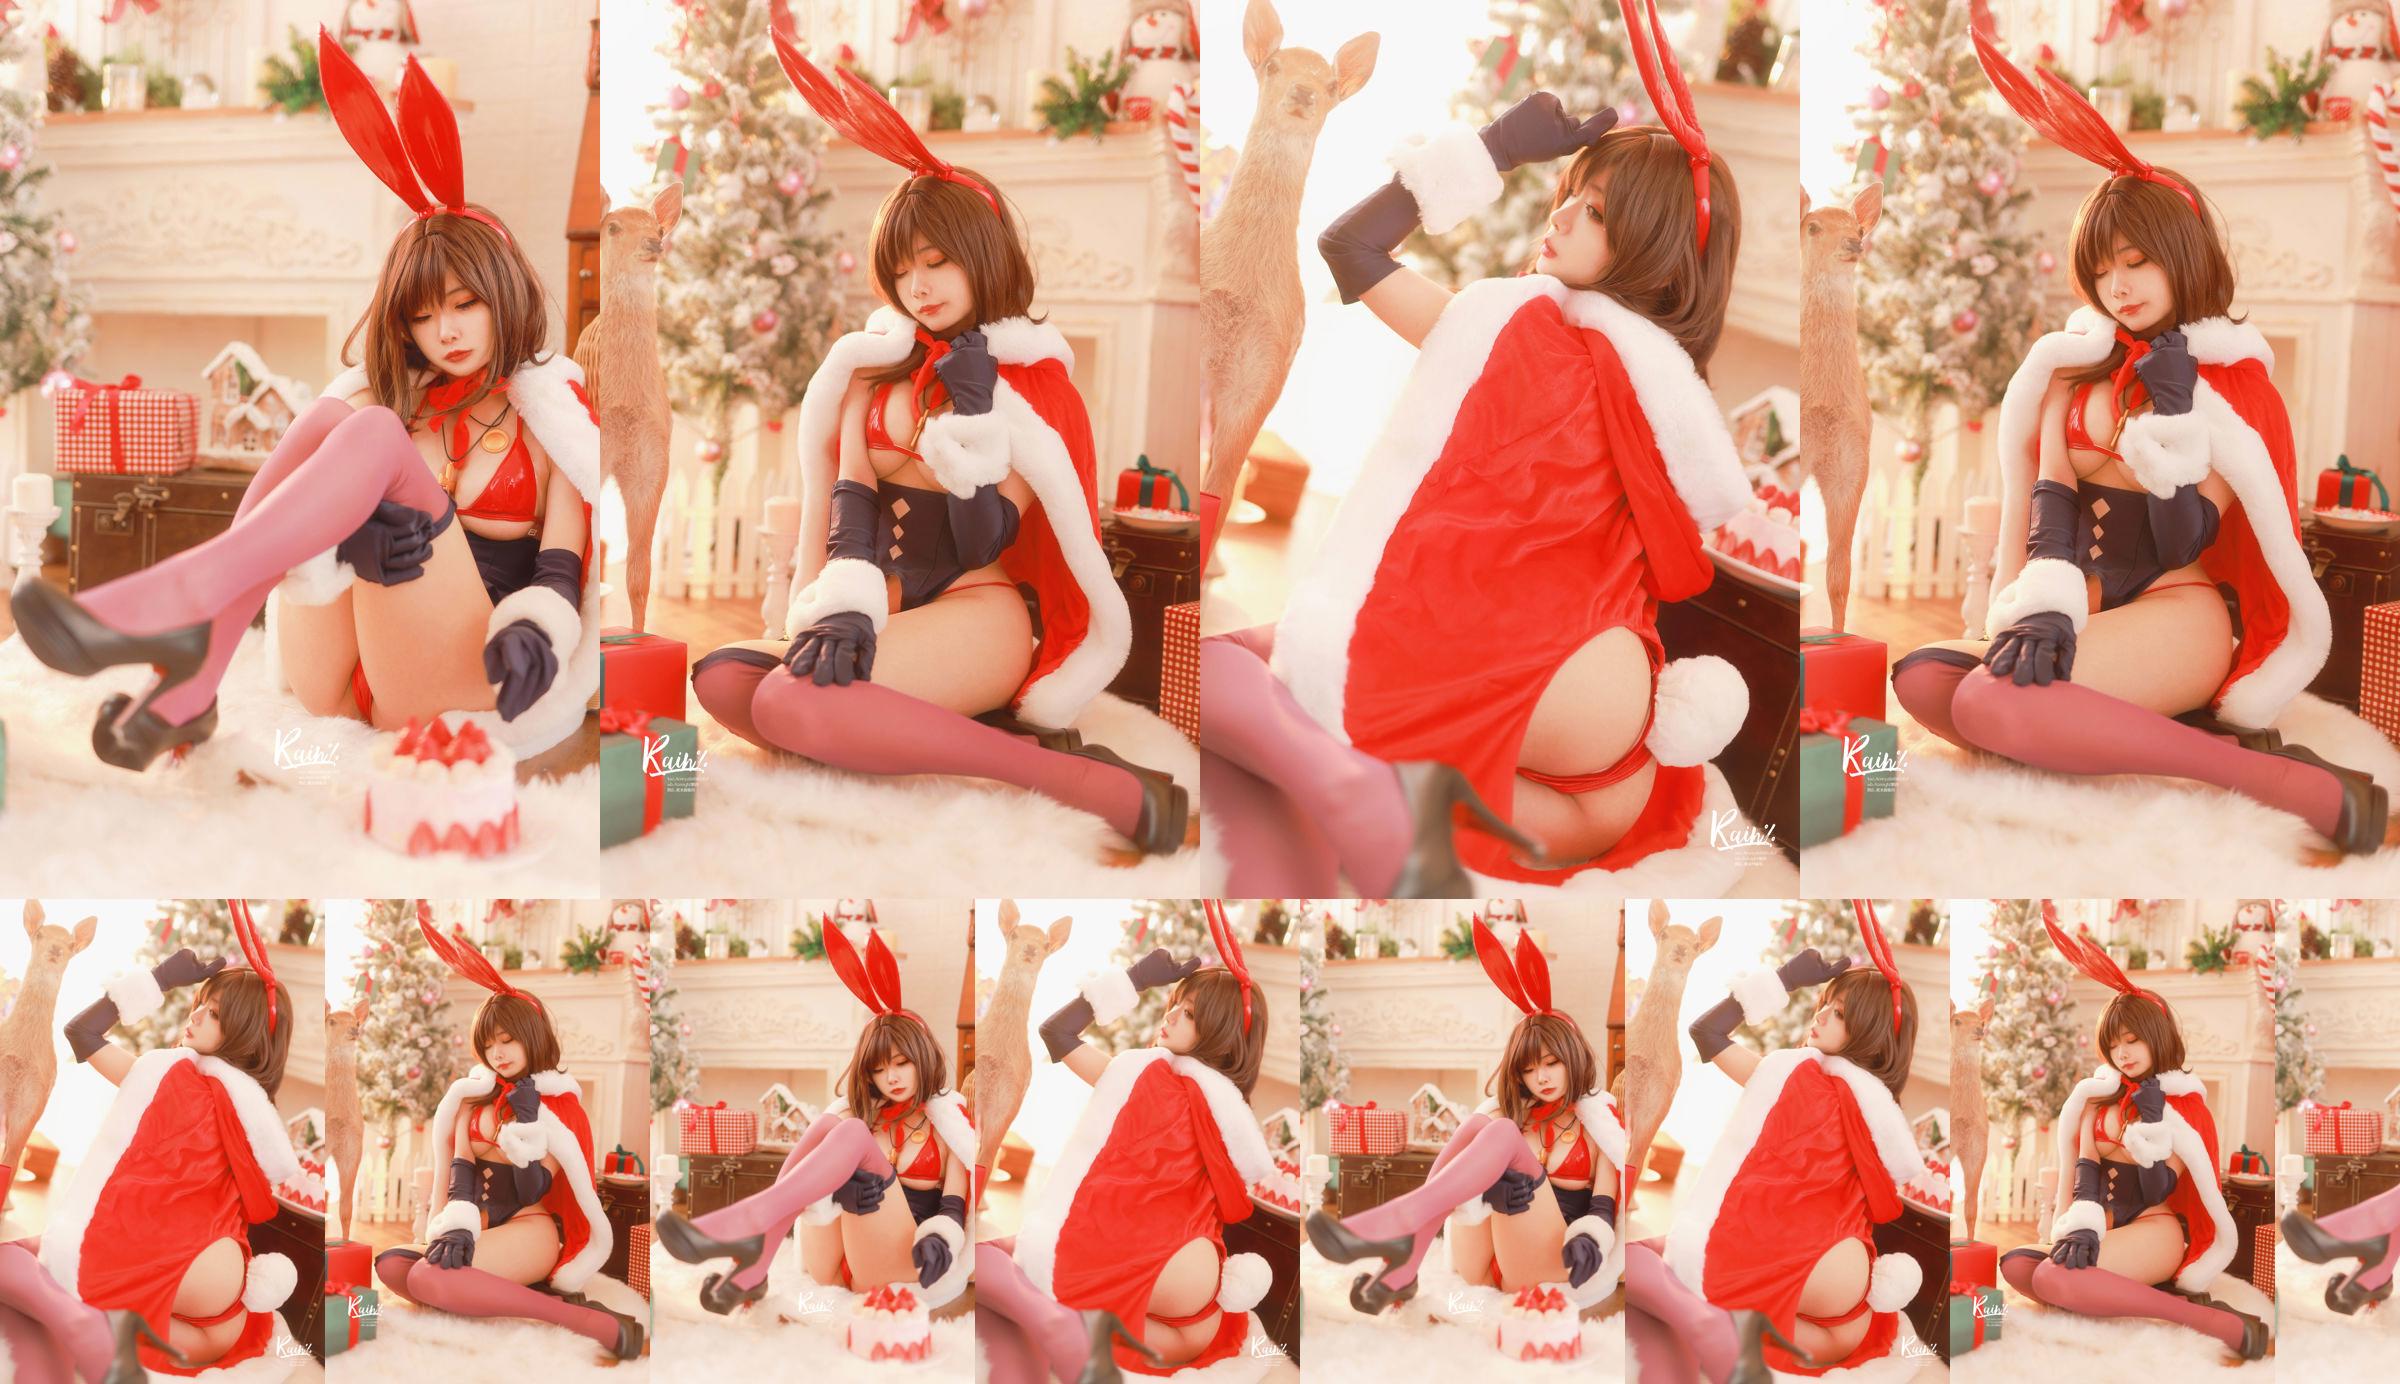 [Net Red COSER Photo] Anime blogger Rainight 魈雨-Christmas Rabbit No.06b93a Page 2